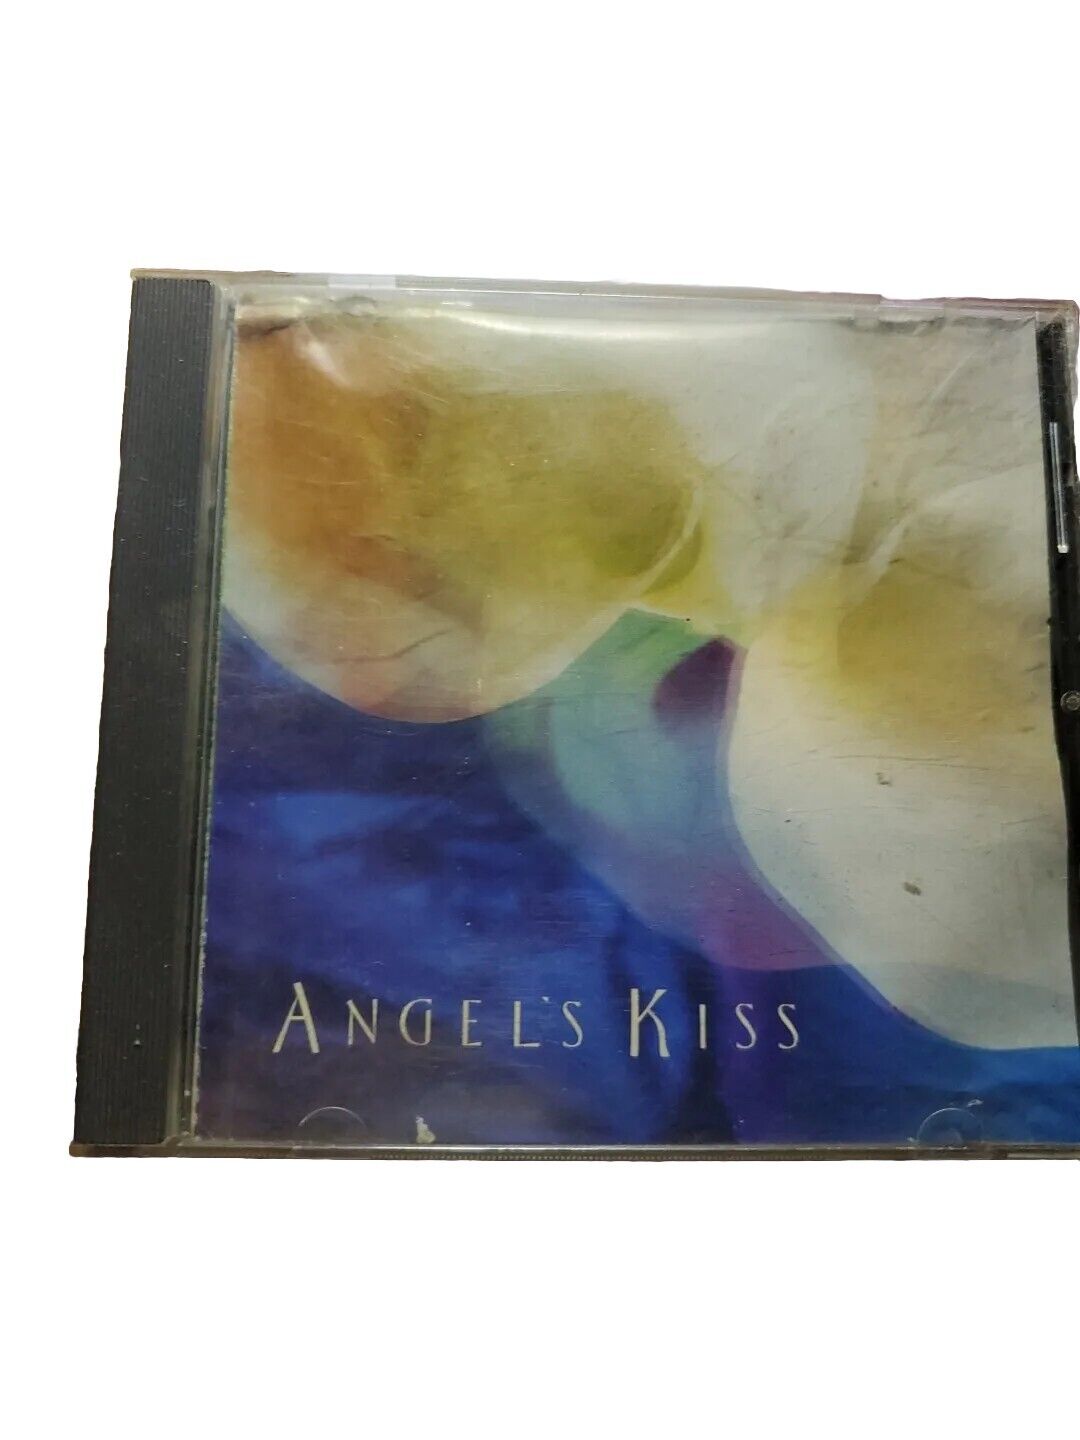 TOMMY GREER - ANGELS KISS - CD ALBUM - 1995 - V80232 - UNISON - RELAXATION CD